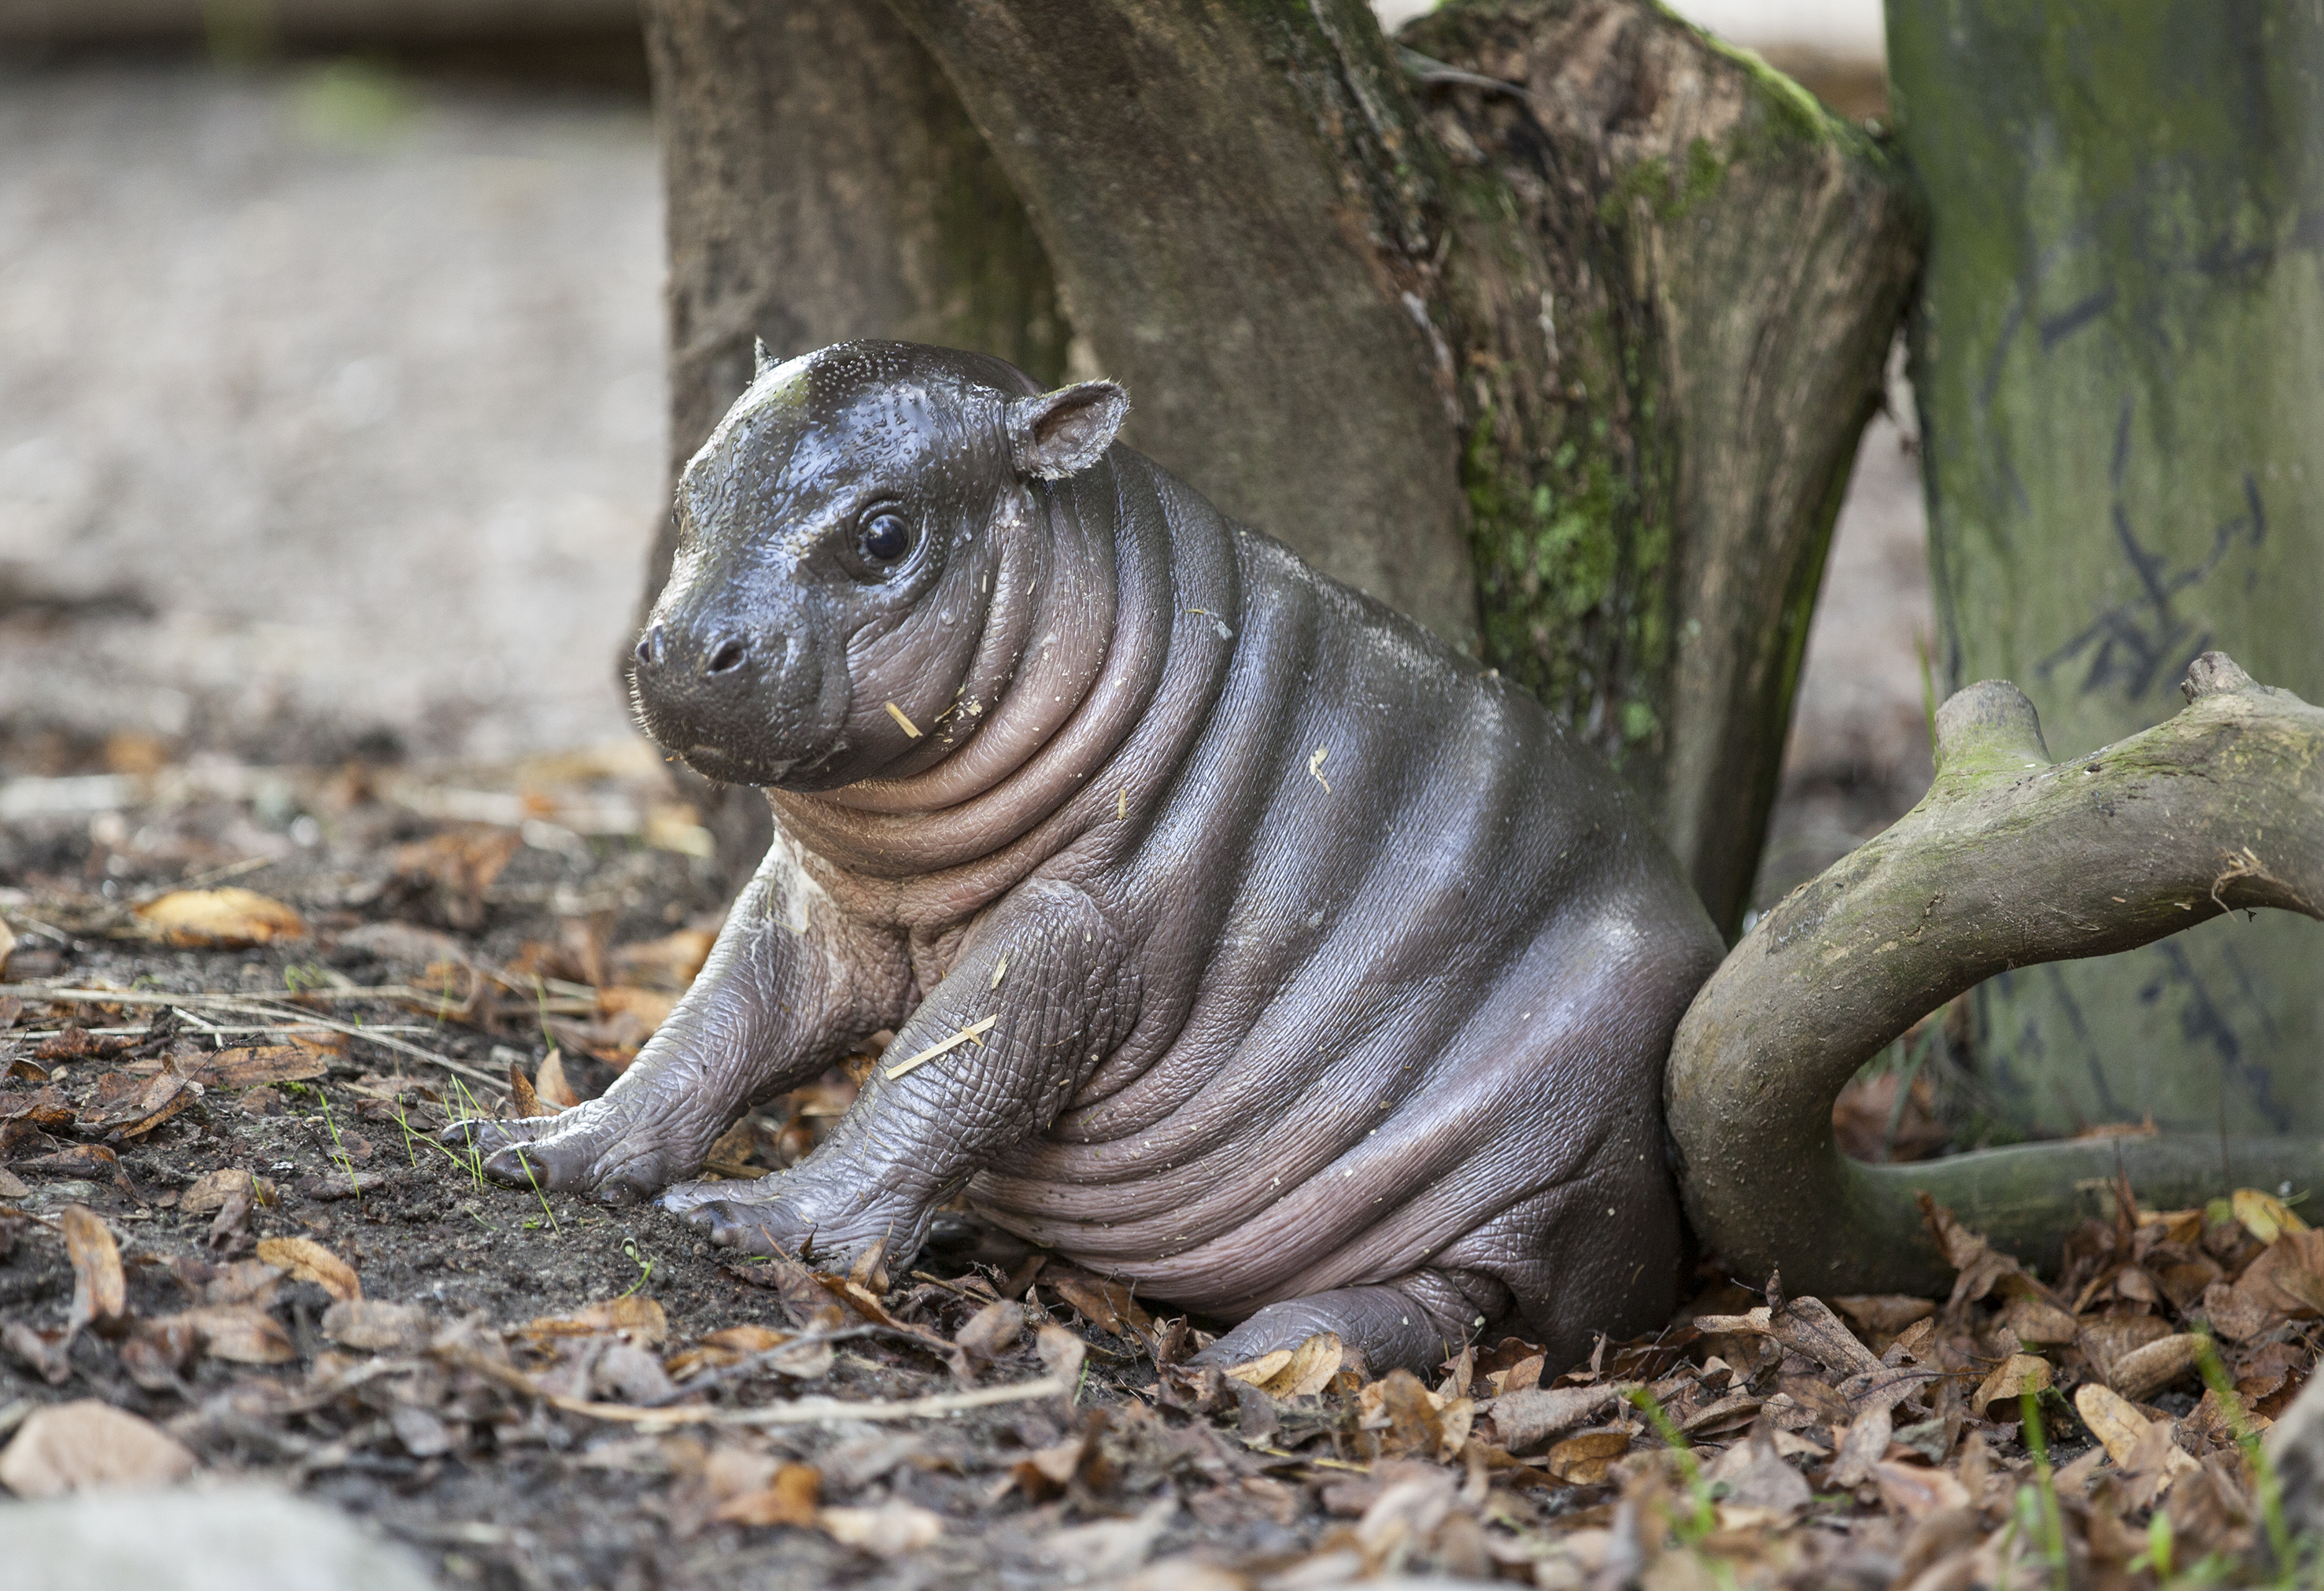 Cute baby Dwarf Hippo arrives at Parken Zoo in Sweden